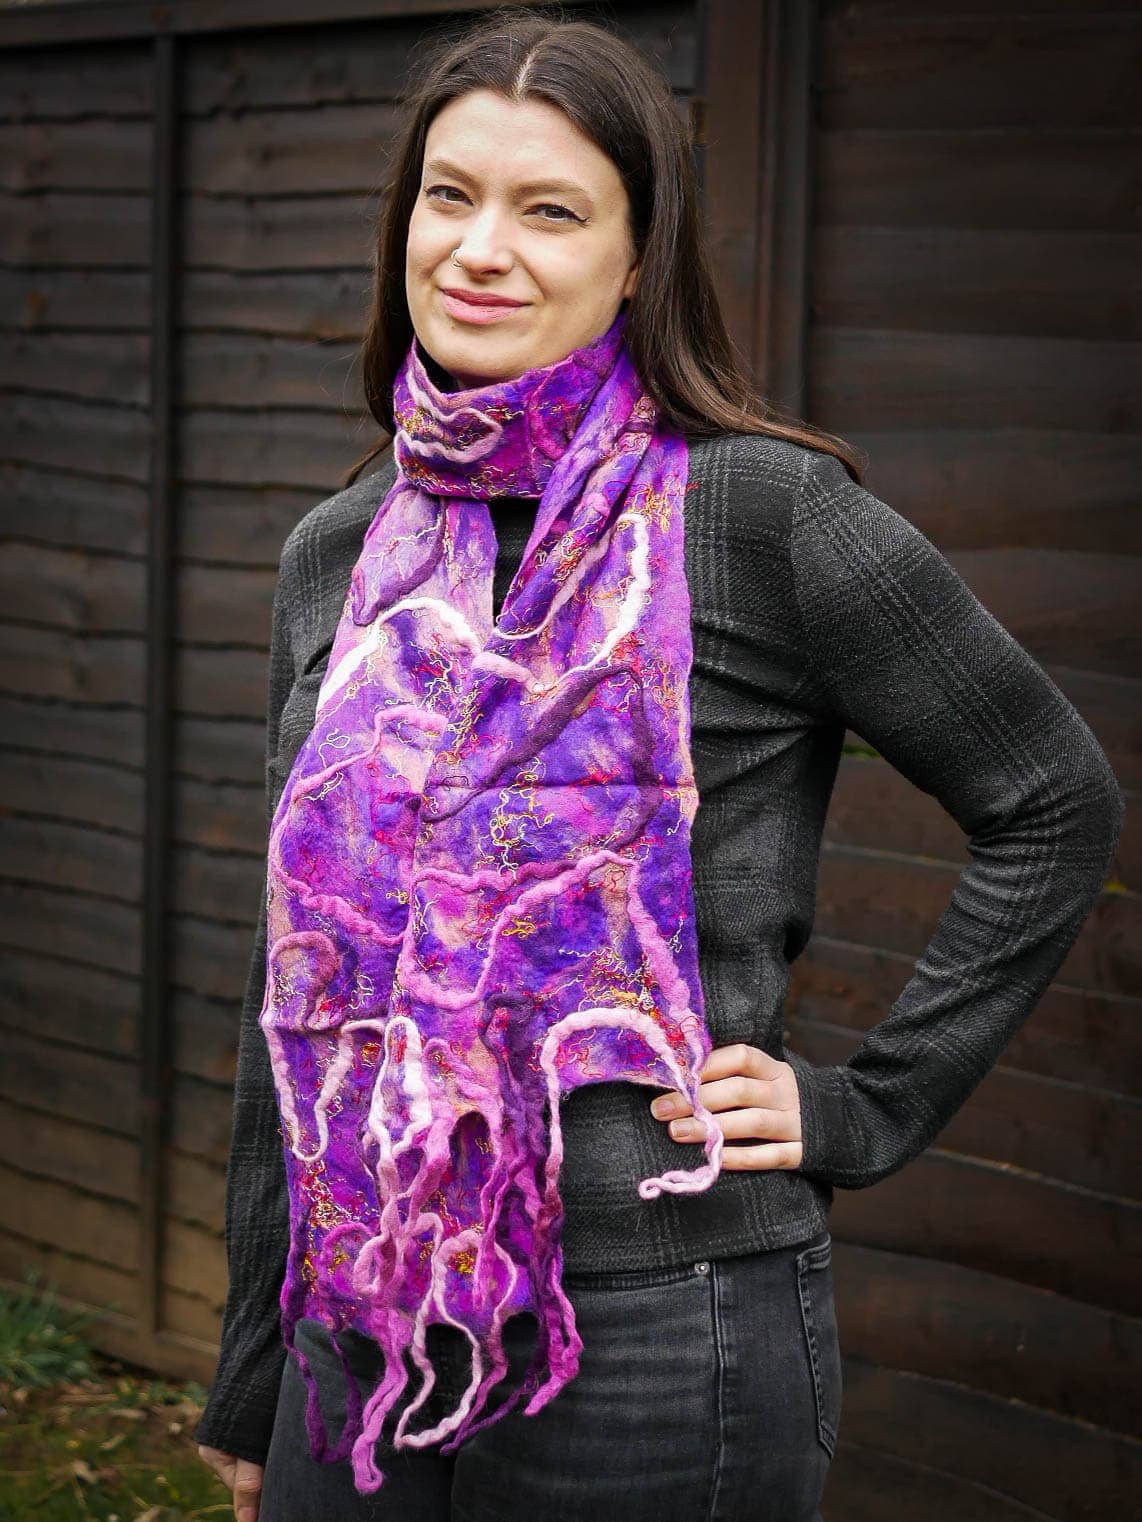 https://karmagear.co.uk/wp-content/uploads/2014/06/Karma-Gear-Special-Merino-Wool-Silk-Scarf-Handmade-Fair-Trade-Purple-Nebula-2.jpg